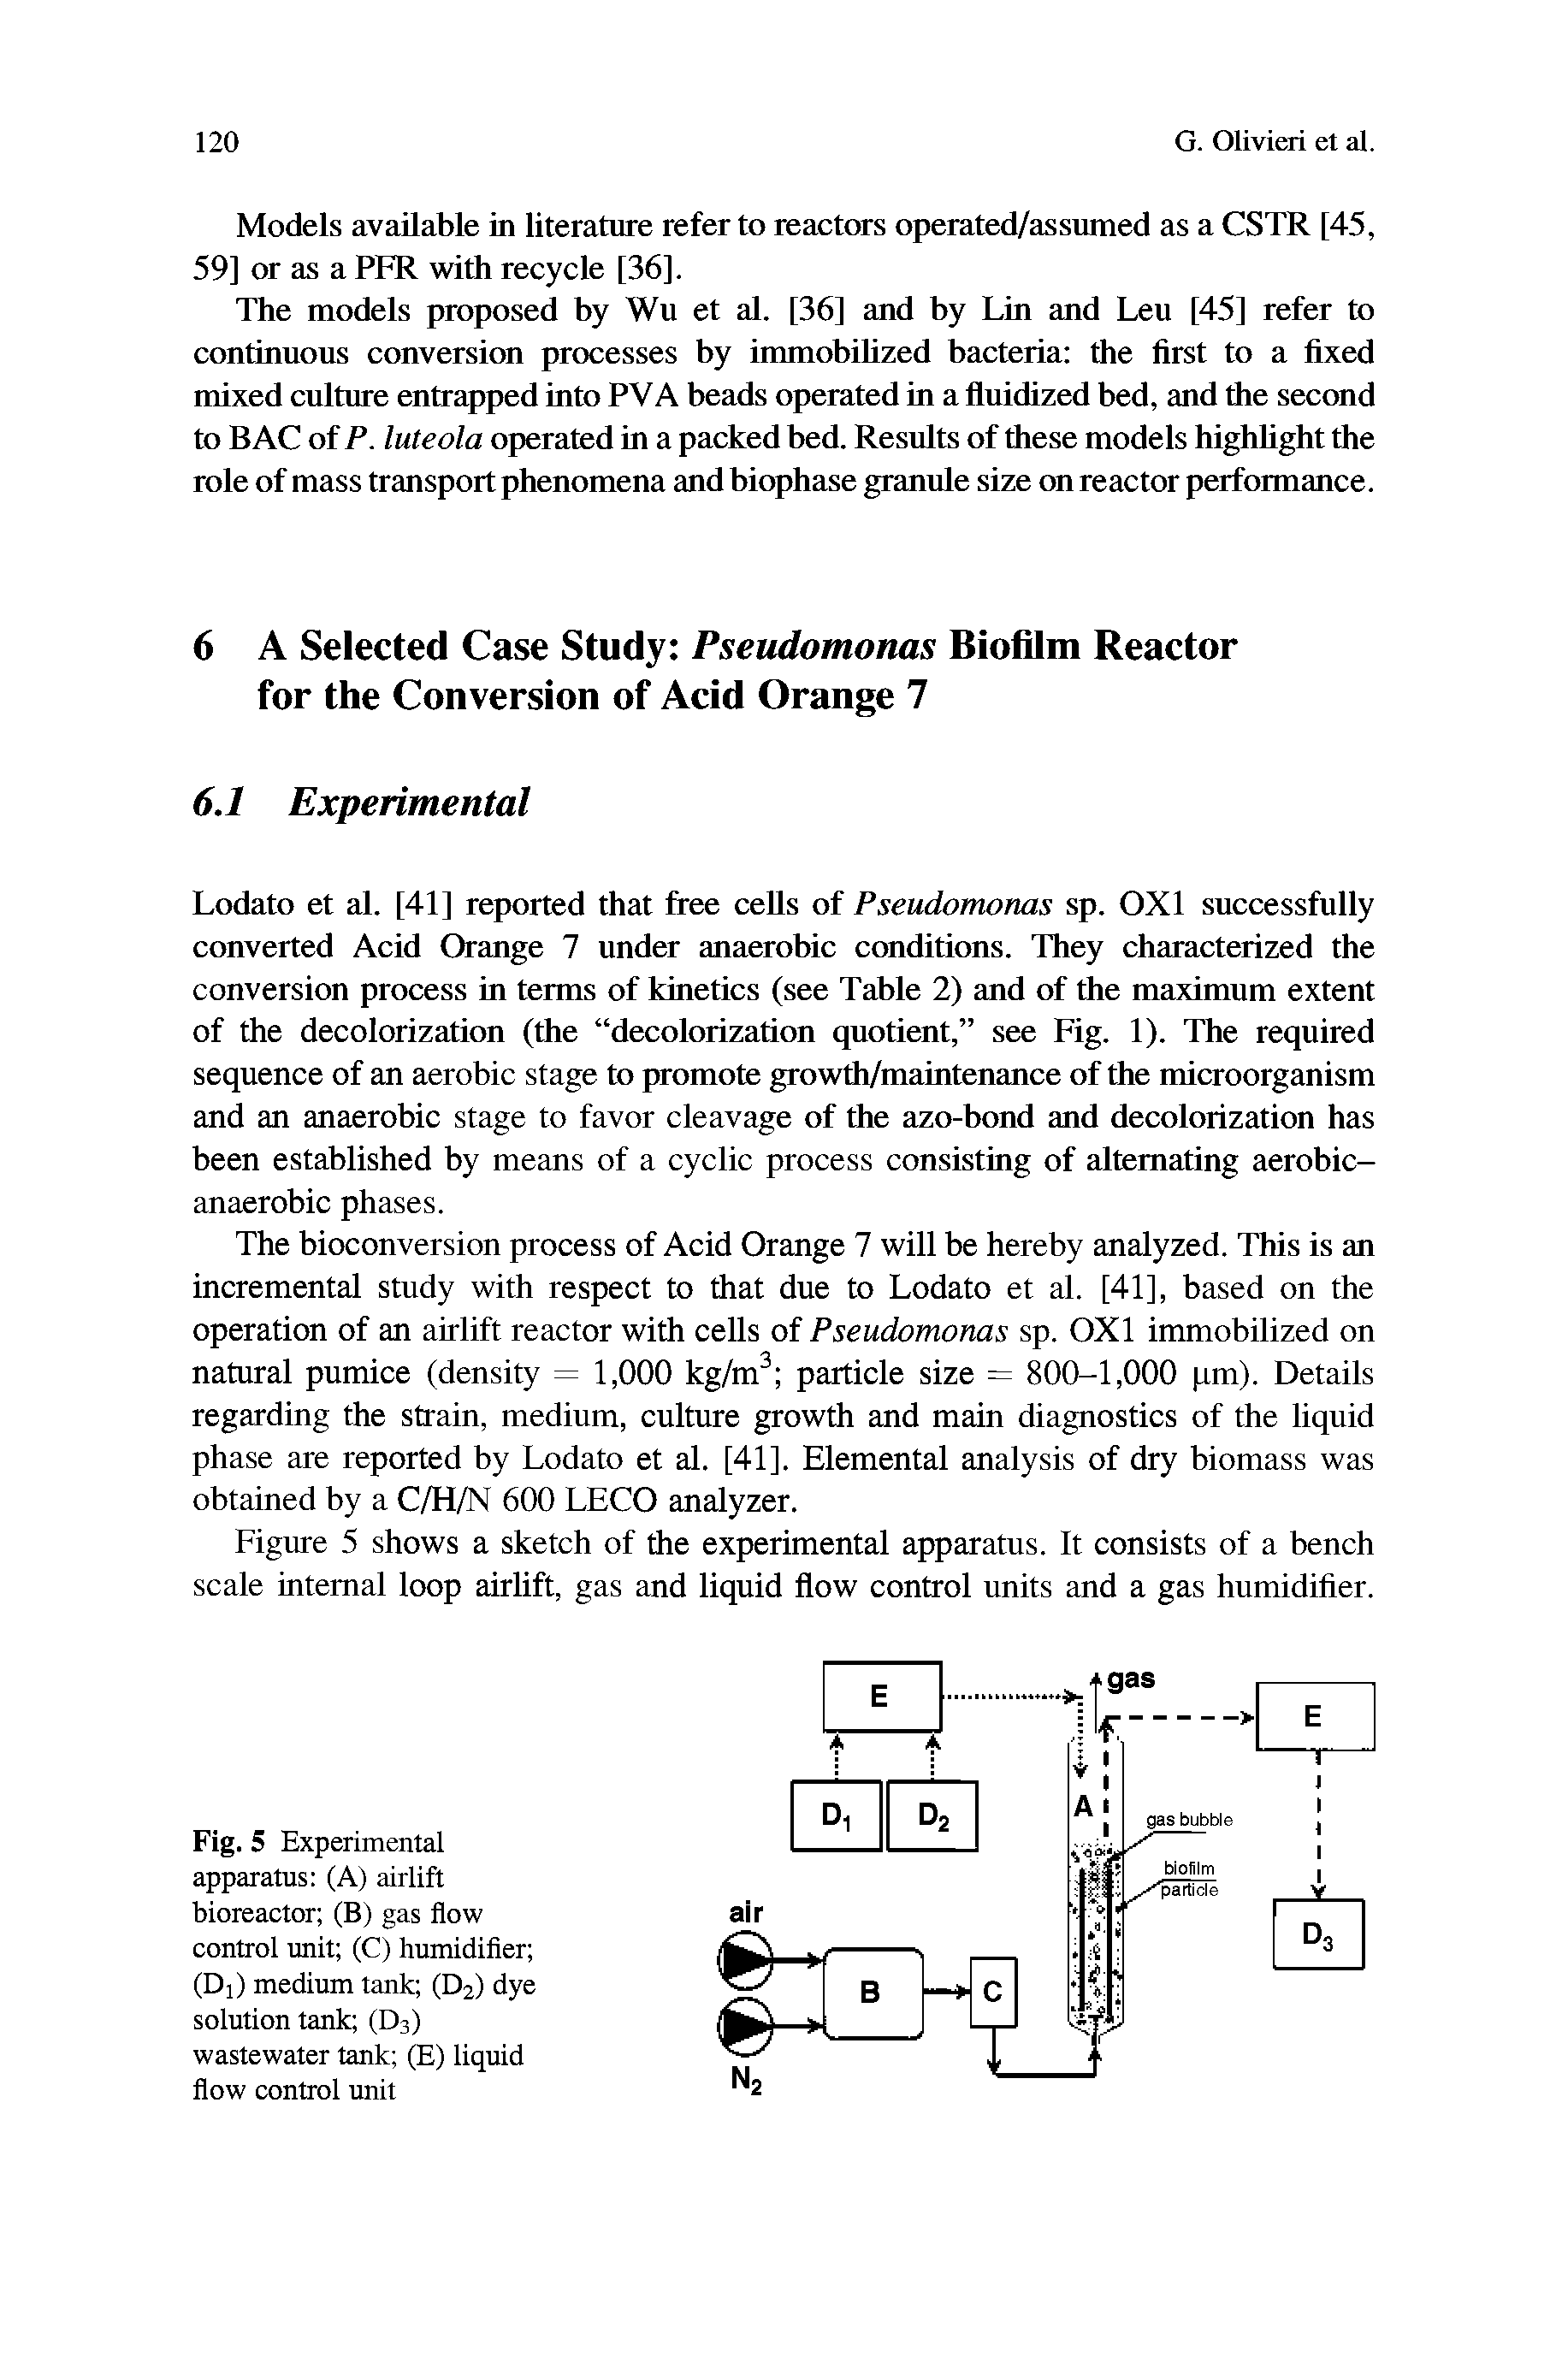 Fig. 5 Experimental apparatus (A) airlift bioreactor (B) gas flow control unit (C) humidifier (Dj) medium tank (D2) dye solution tank (D3) wastewater tank (E) liquid flow control unit...